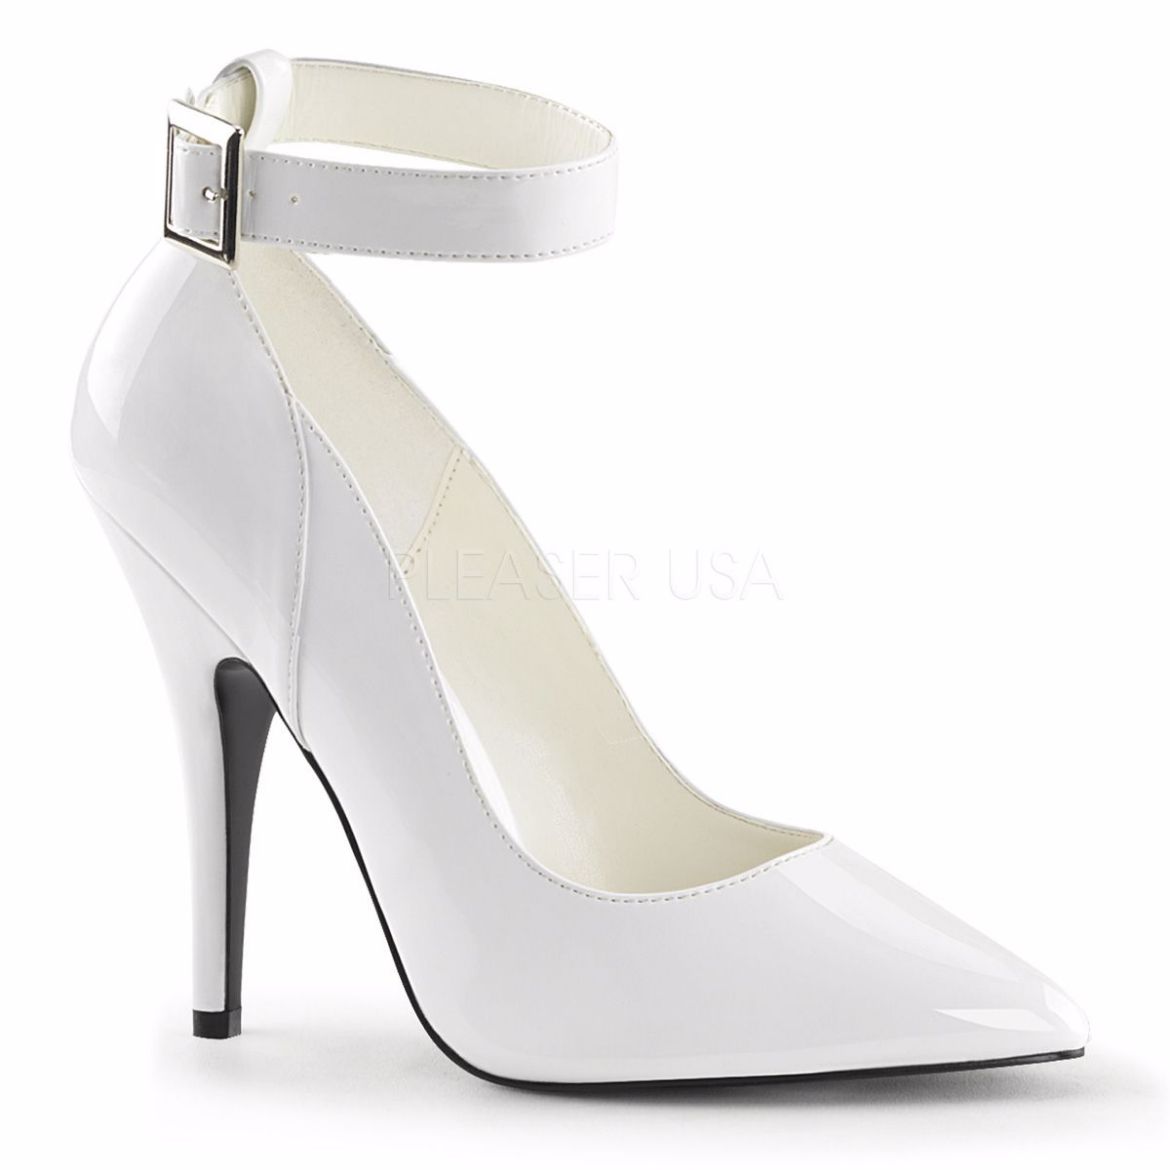 Product image of Pleaser Seduce-431 White Patent, 5 inch (12.7 cm) Heel Court Pump Shoes